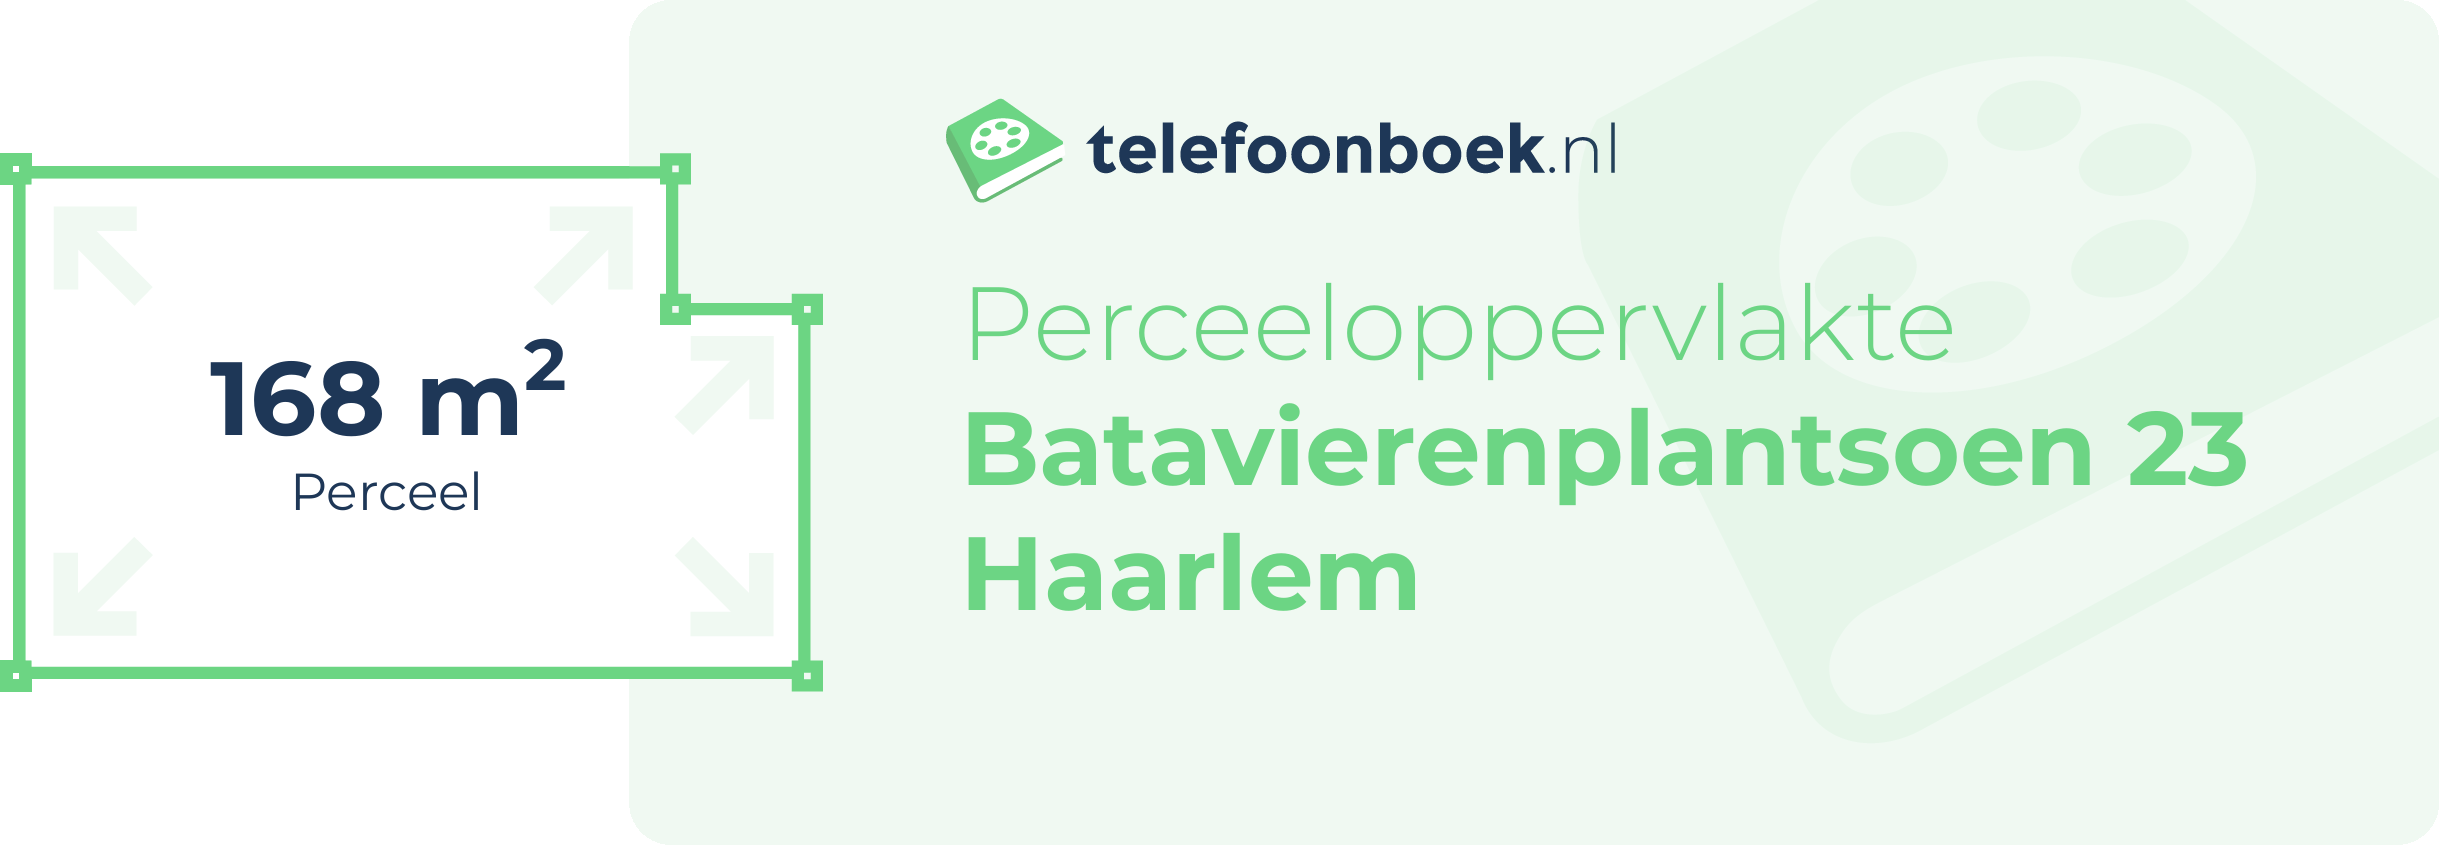 Perceeloppervlakte Batavierenplantsoen 23 Haarlem